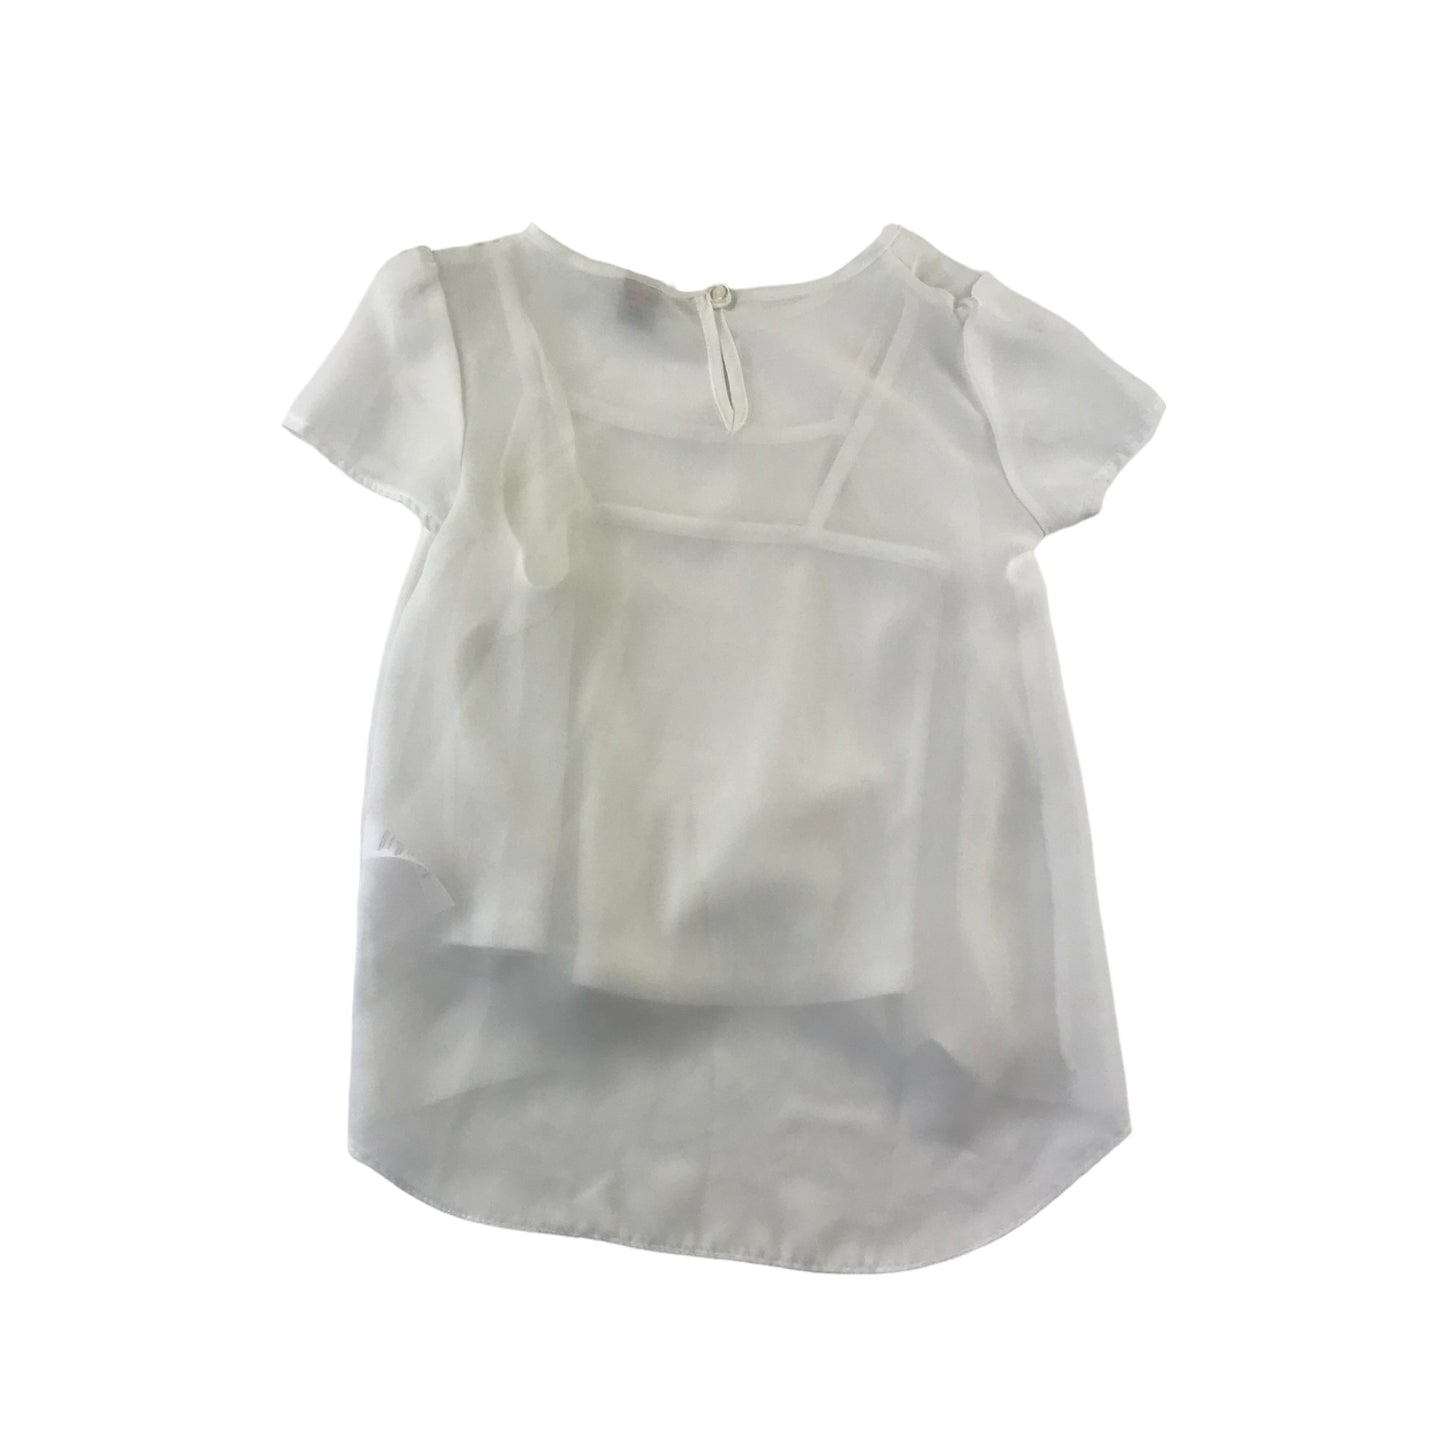 Tu Blouse Age 6 White Chiffon Style See Through T-shirt with white sleeveless under top